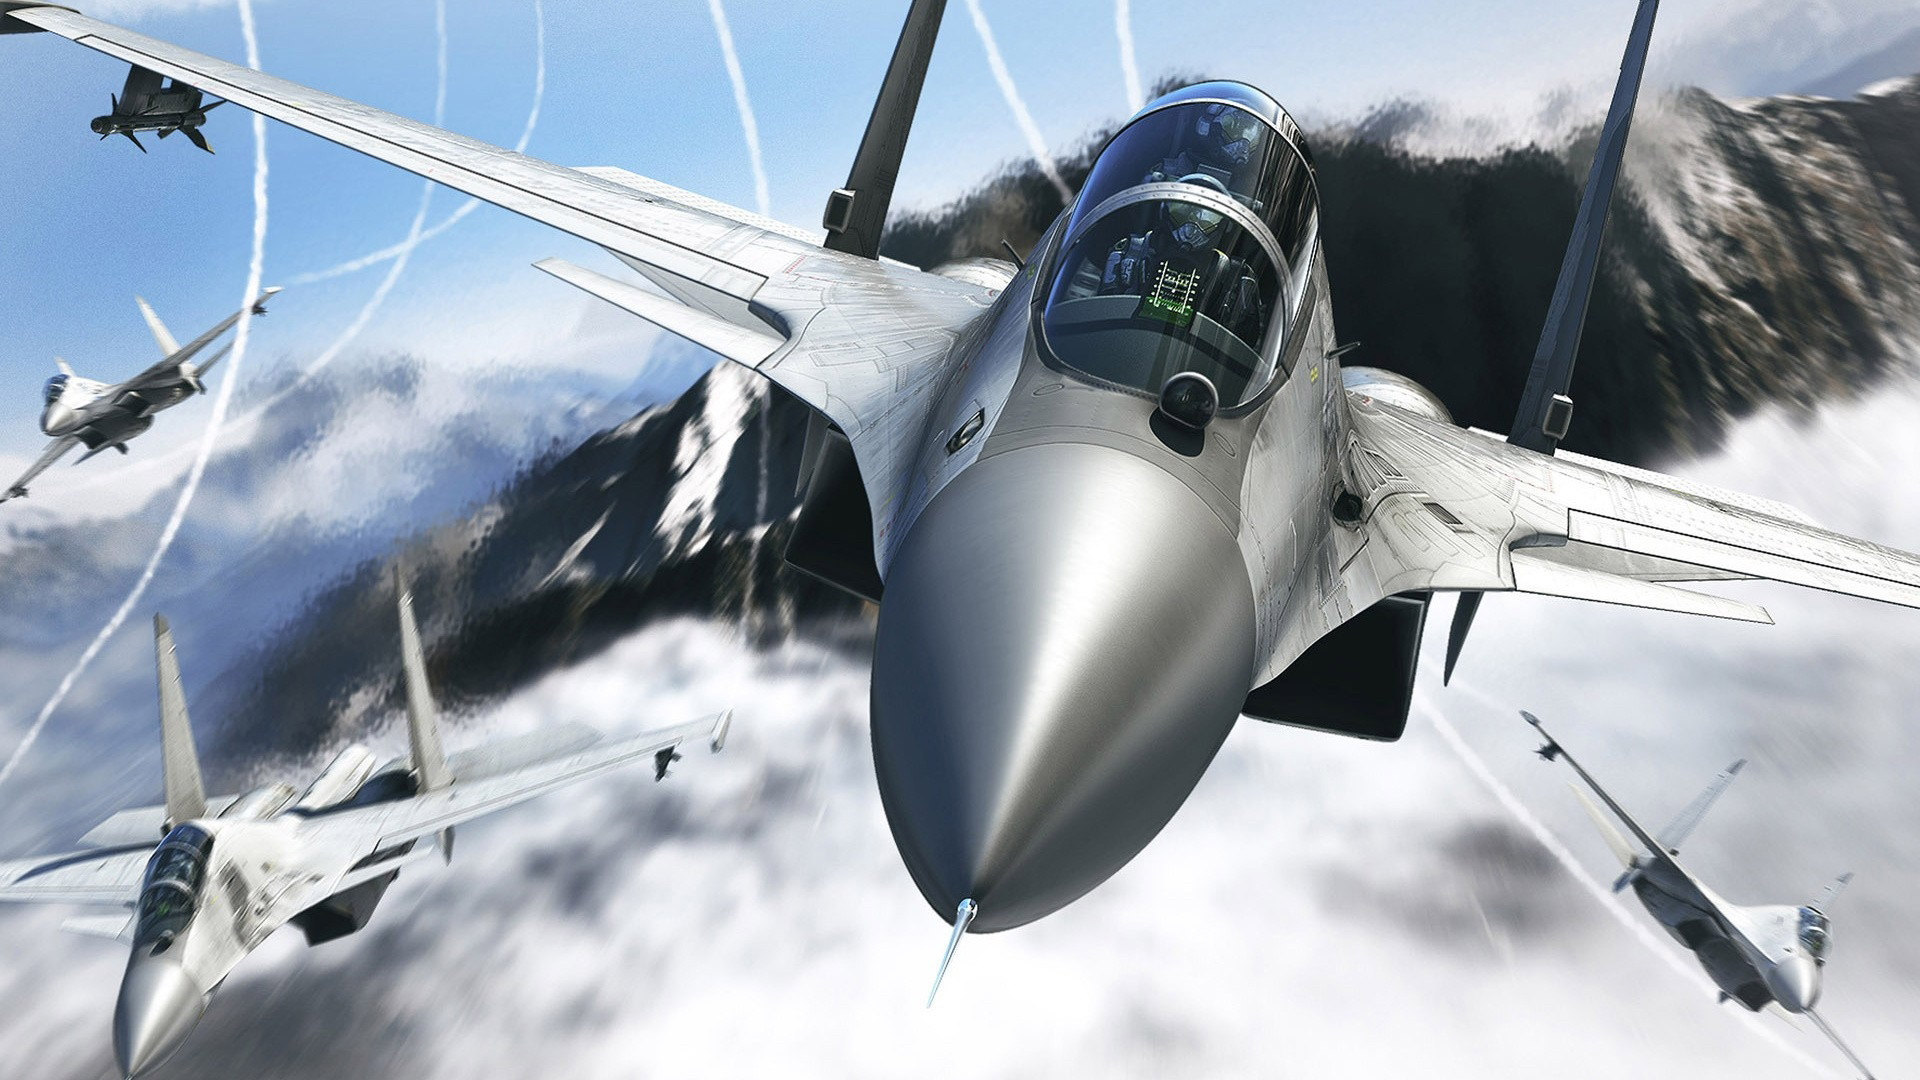 hd wallpaper jet fighter flying | wallpapers55.com - Best ...